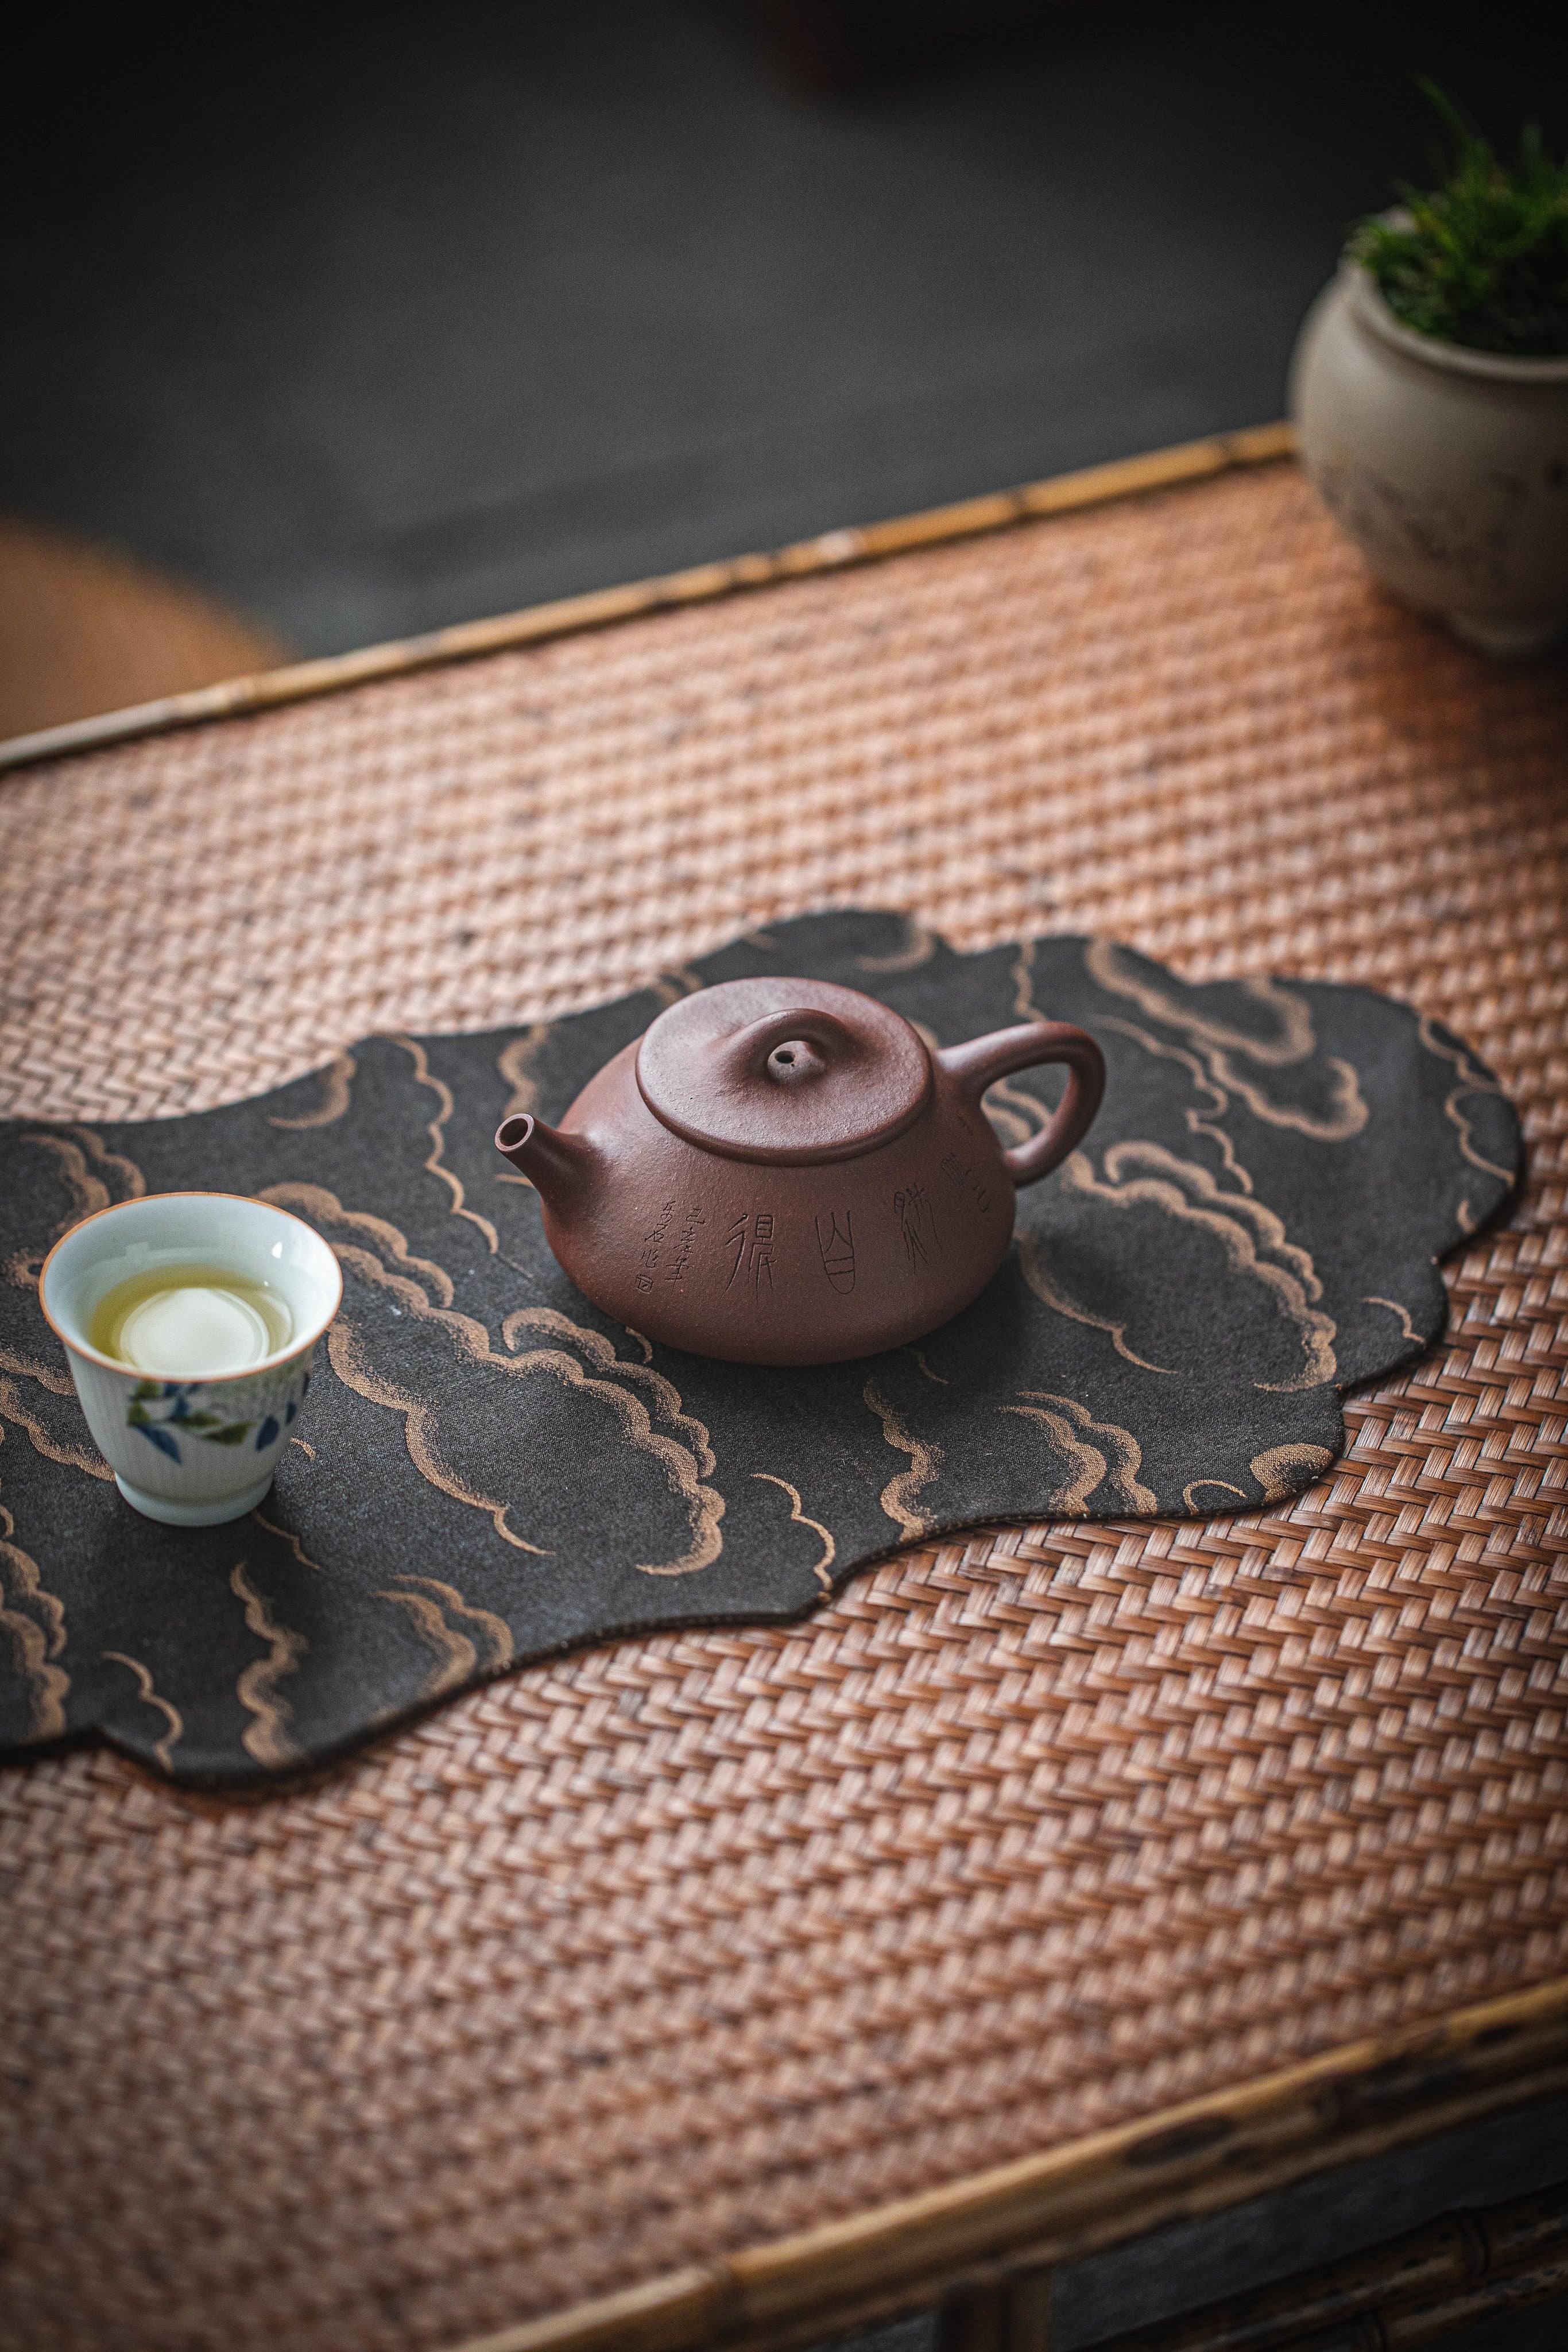 中国茶文化 | Chinese Tea Culture